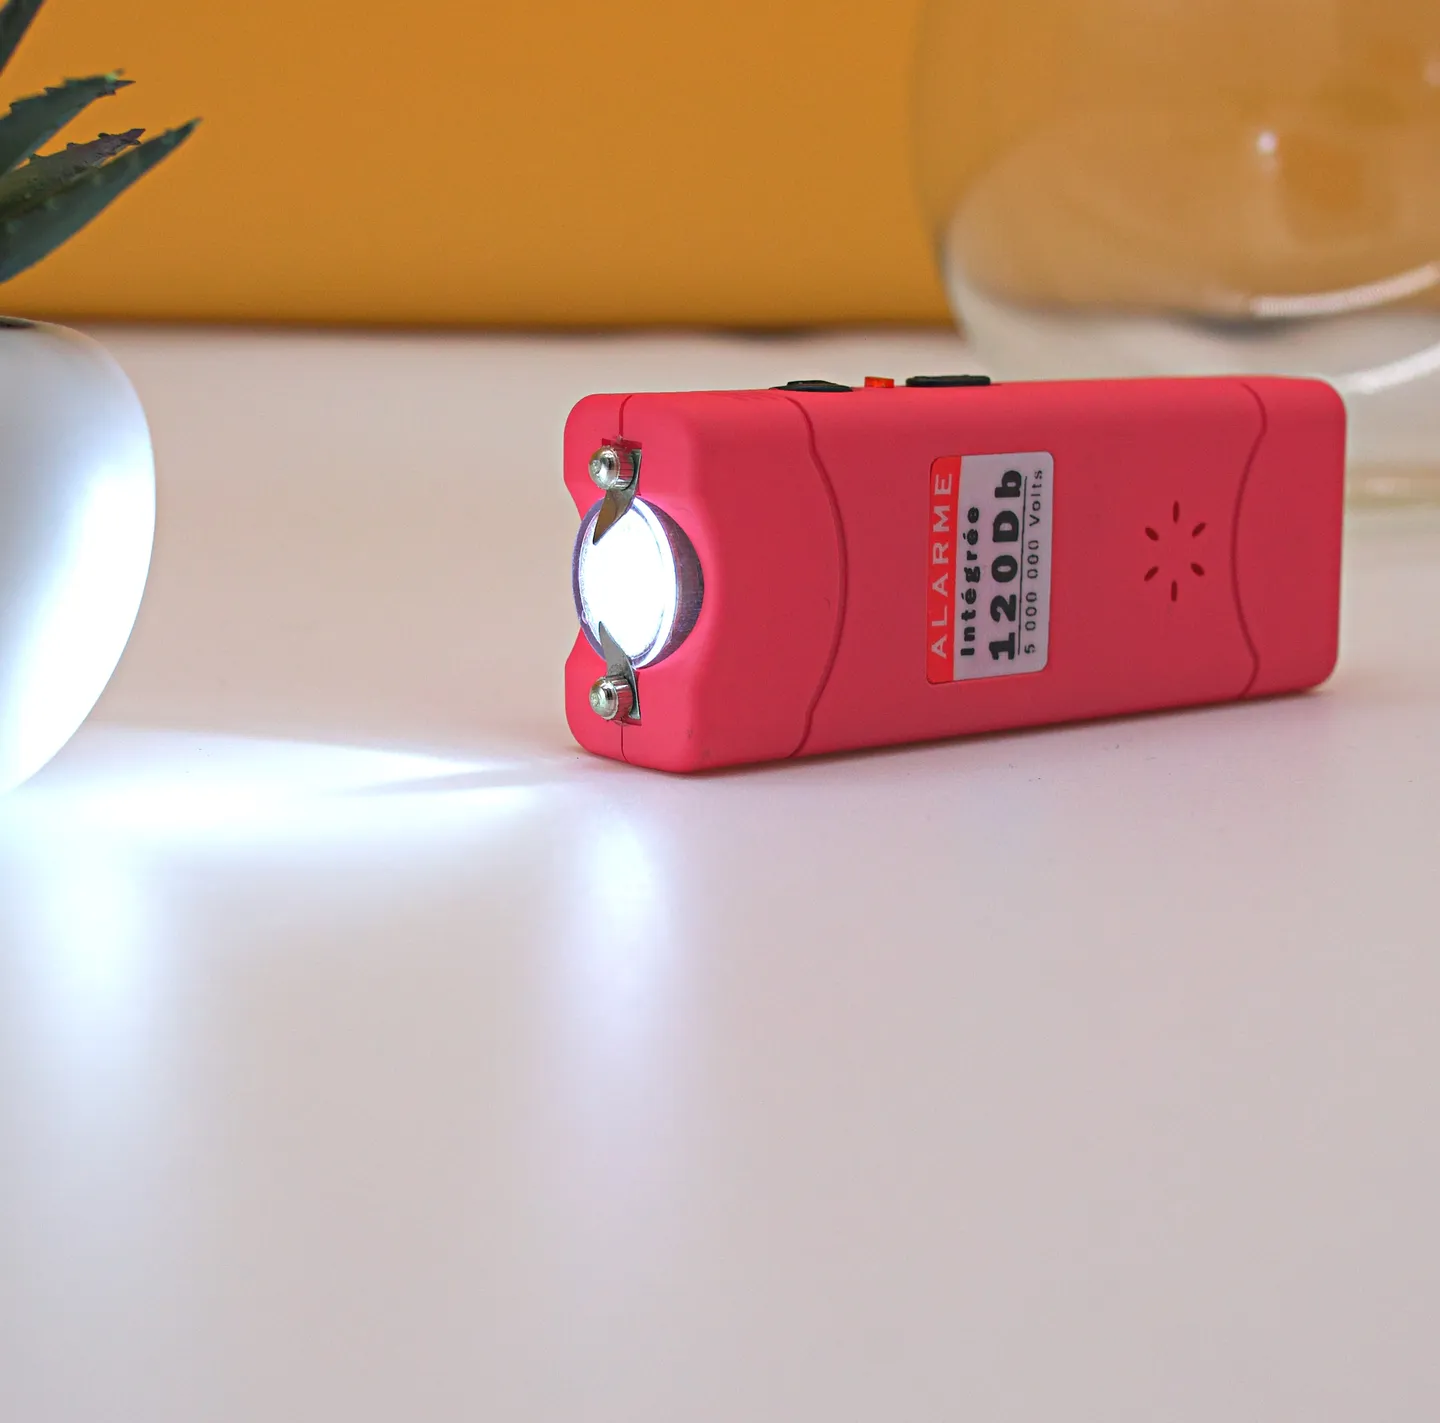 Shocker & Taser - Lo Shocker tascabile rosa con allarme integrato